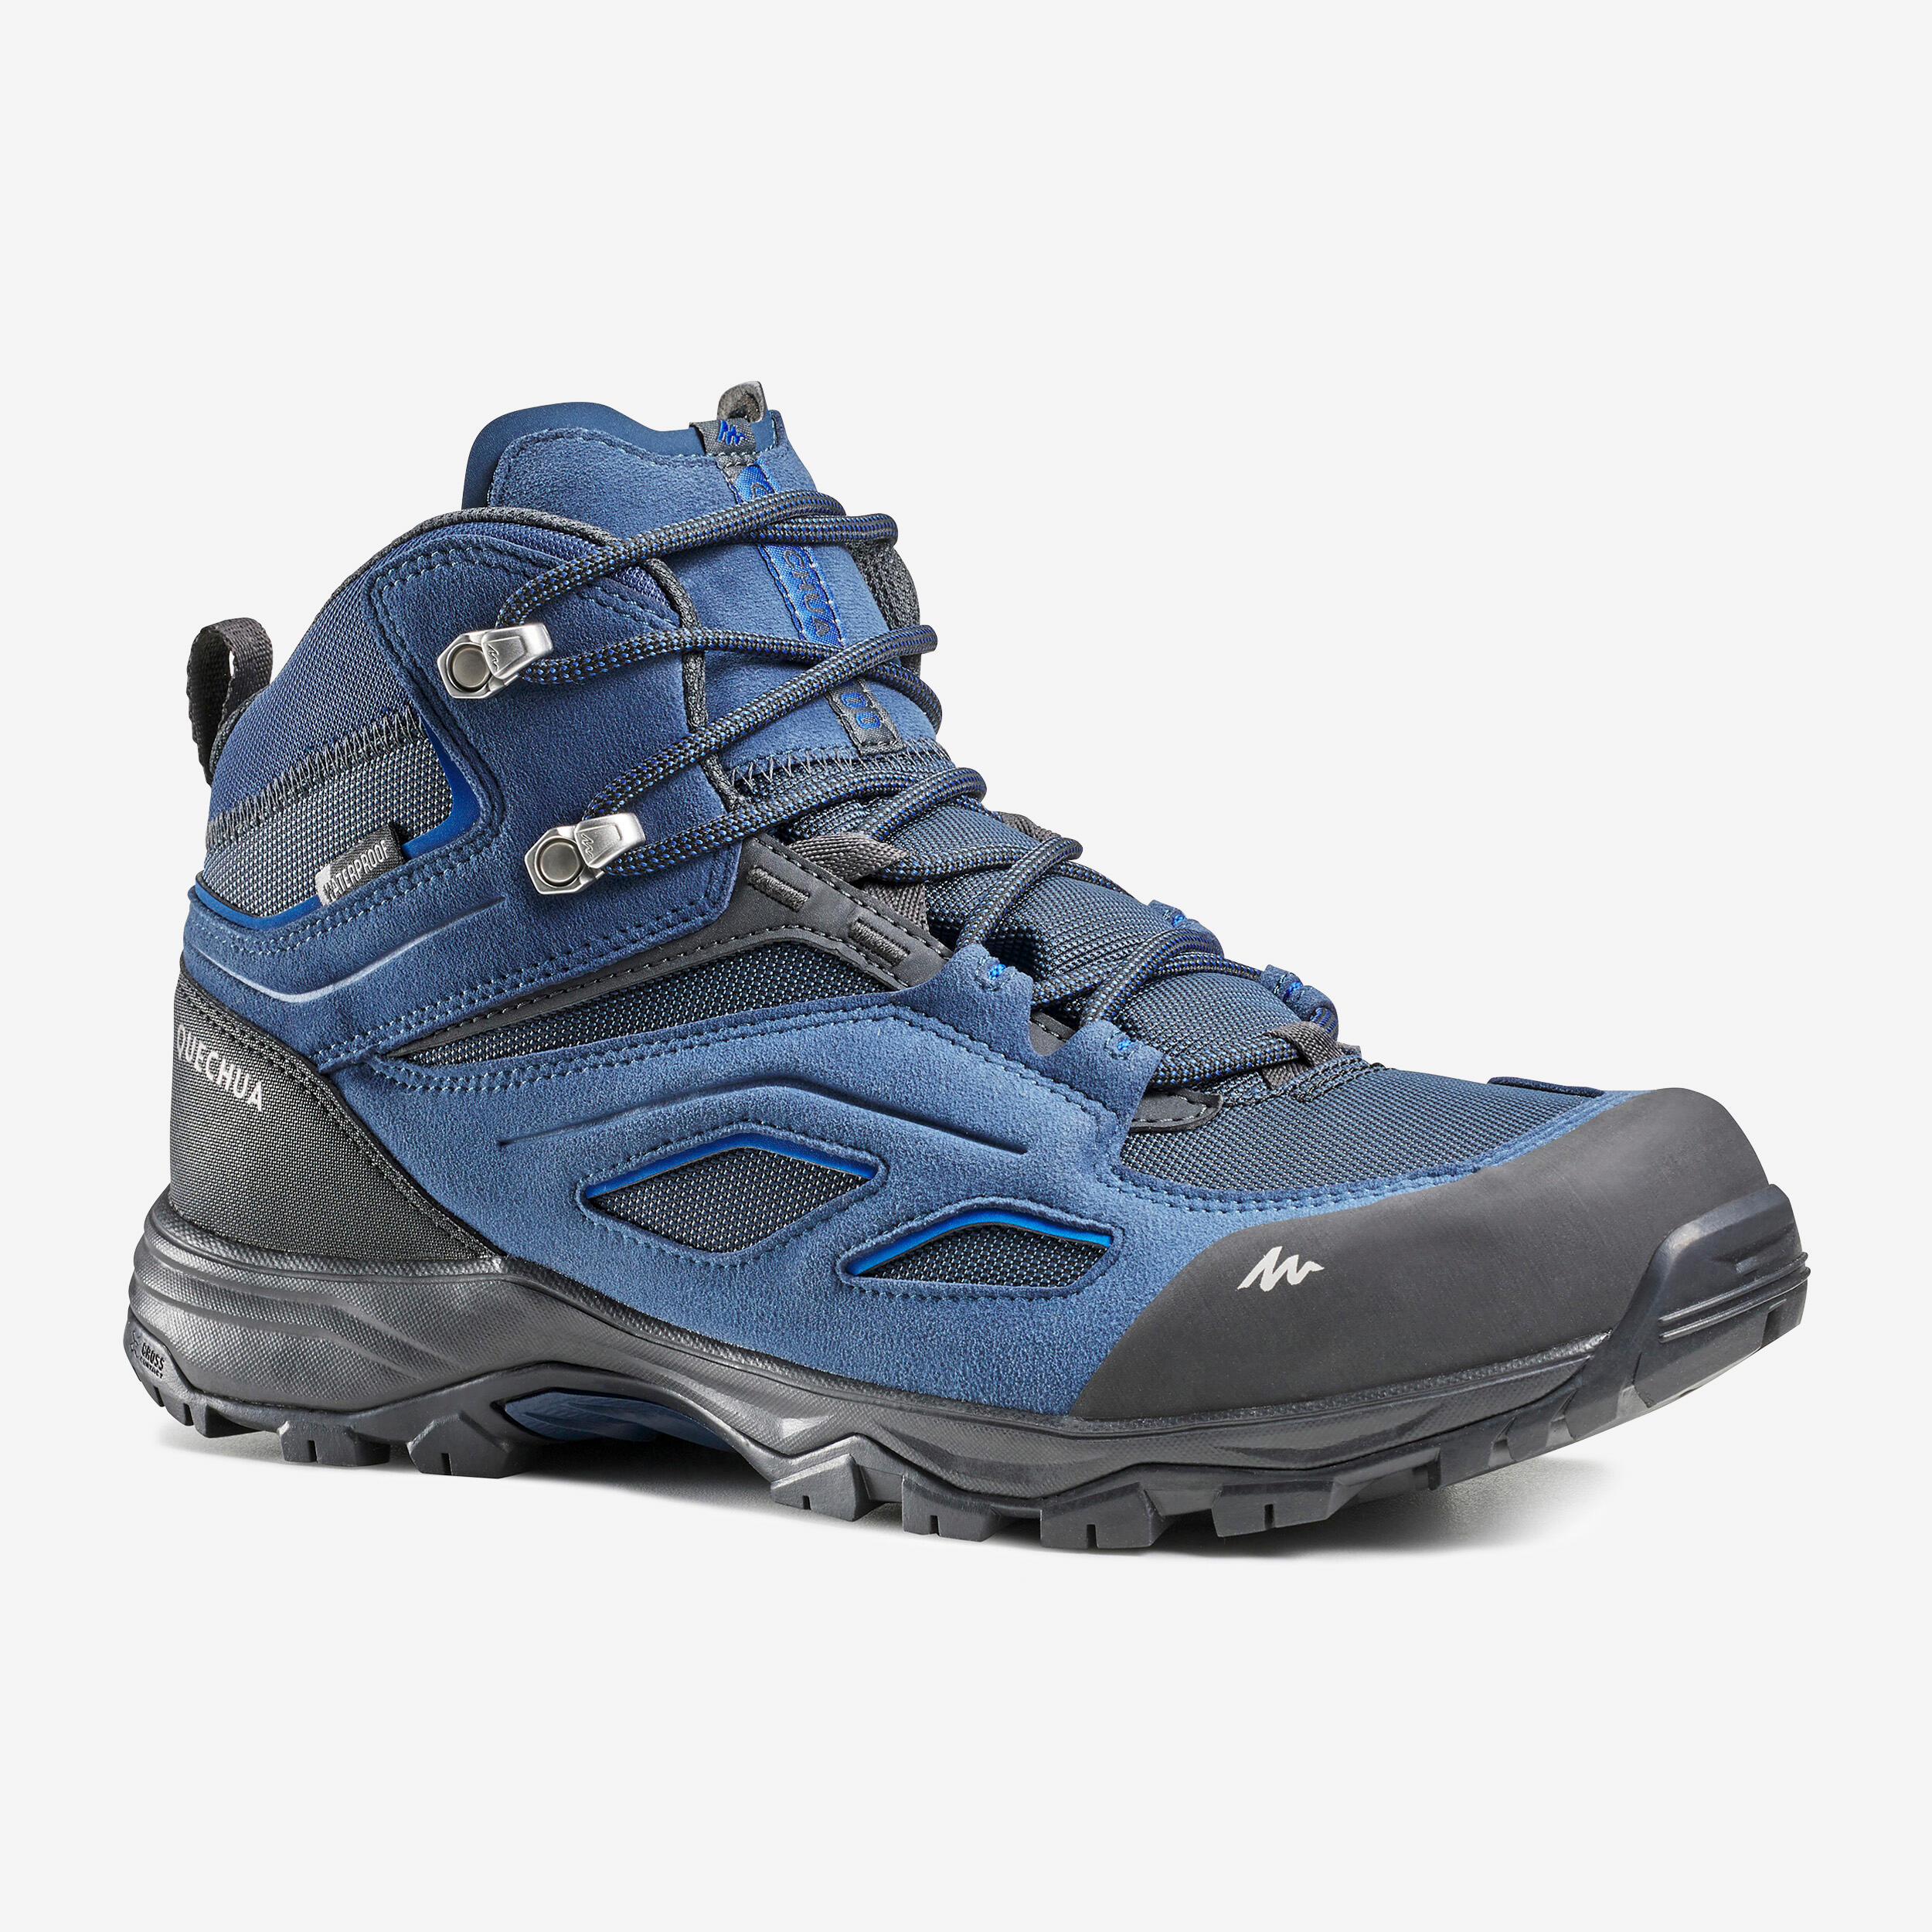 QUECHUA Men's Waterproof Mountain Walking Boots-Shoes MH100 Mid - Blue/black